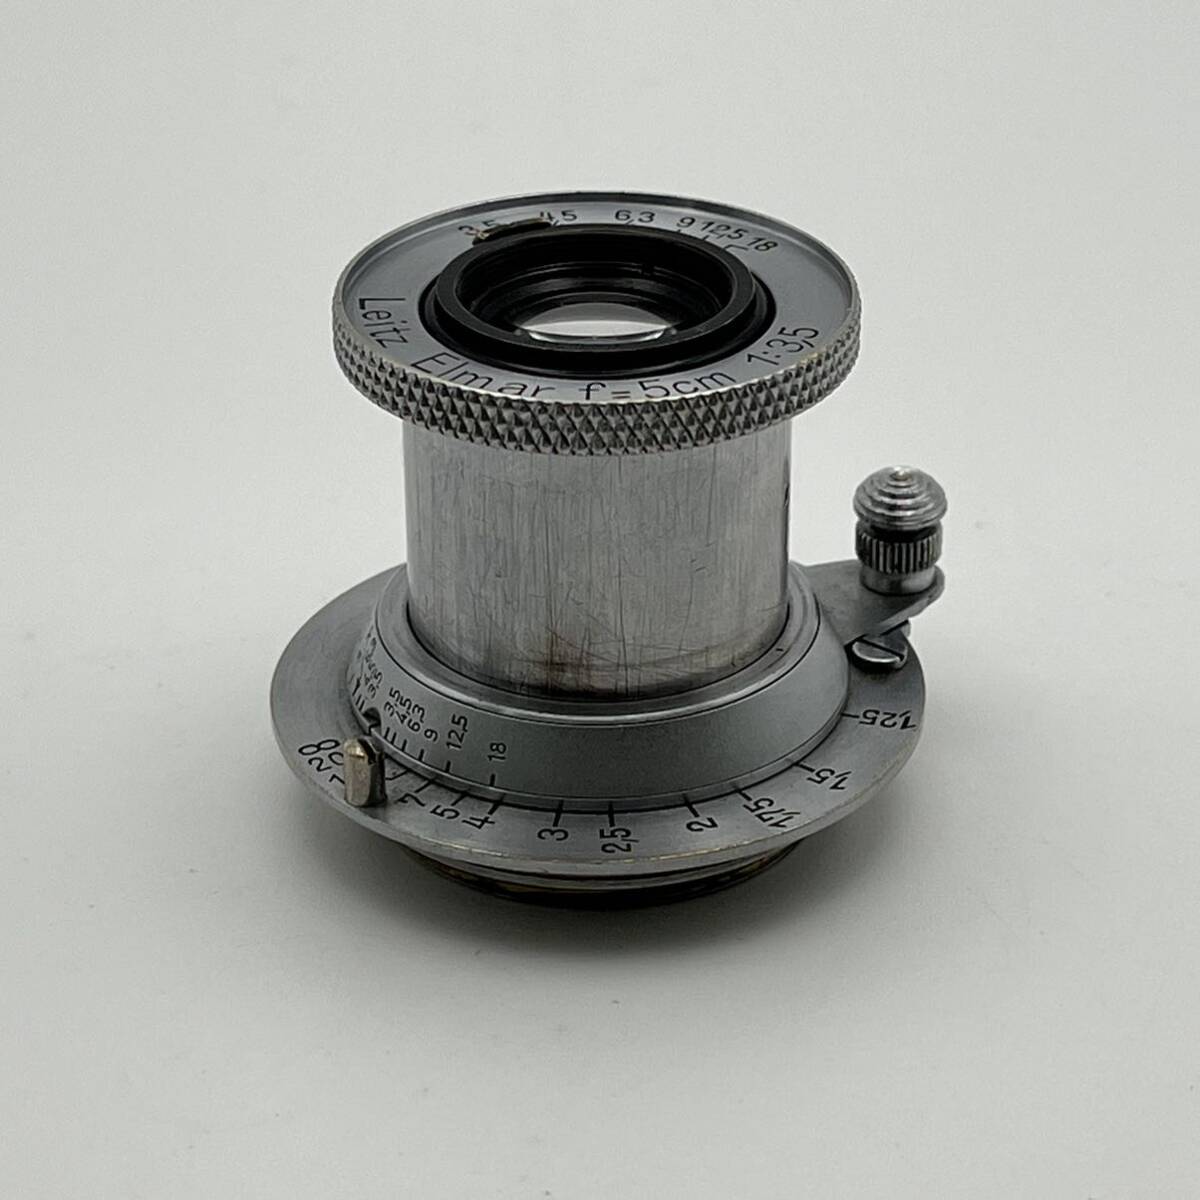 Leitz Elmar 5cm f3.5 ライツ エルマー 50mm Ernst Leitz Wetzlar Leica ライカ Lマウント 1936年 ドイツ製 沈胴式 標準レンズ